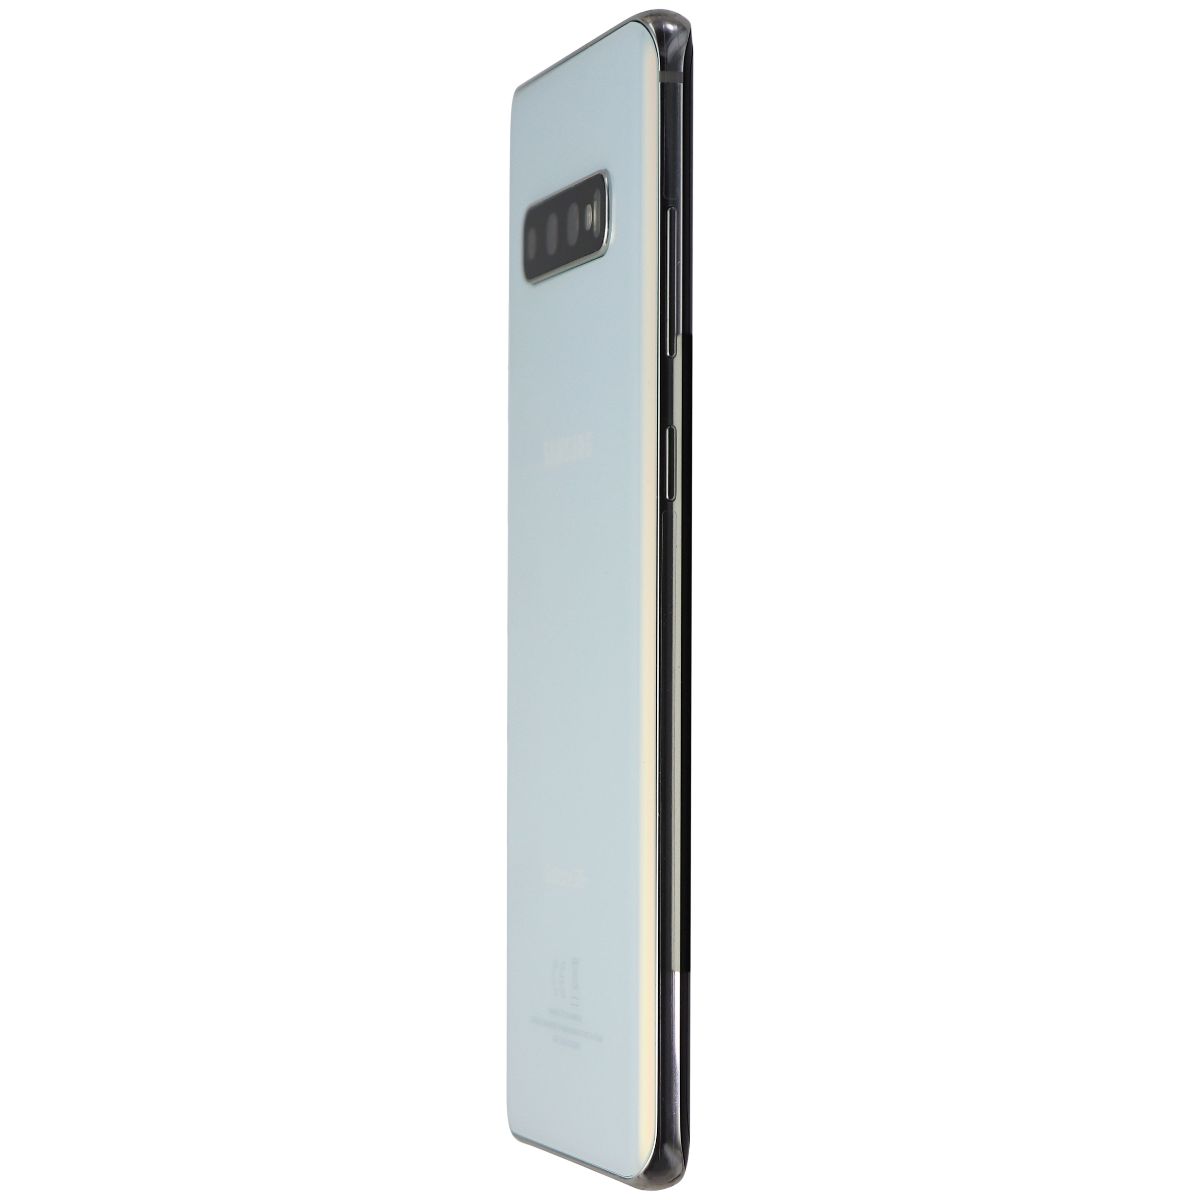 Samsung Galaxy S10+ (Plus) SM-G975U (Unlocked) - 128GB / Prism White Cell Phones & Smartphones Samsung    - Simple Cell Bulk Wholesale Pricing - USA Seller